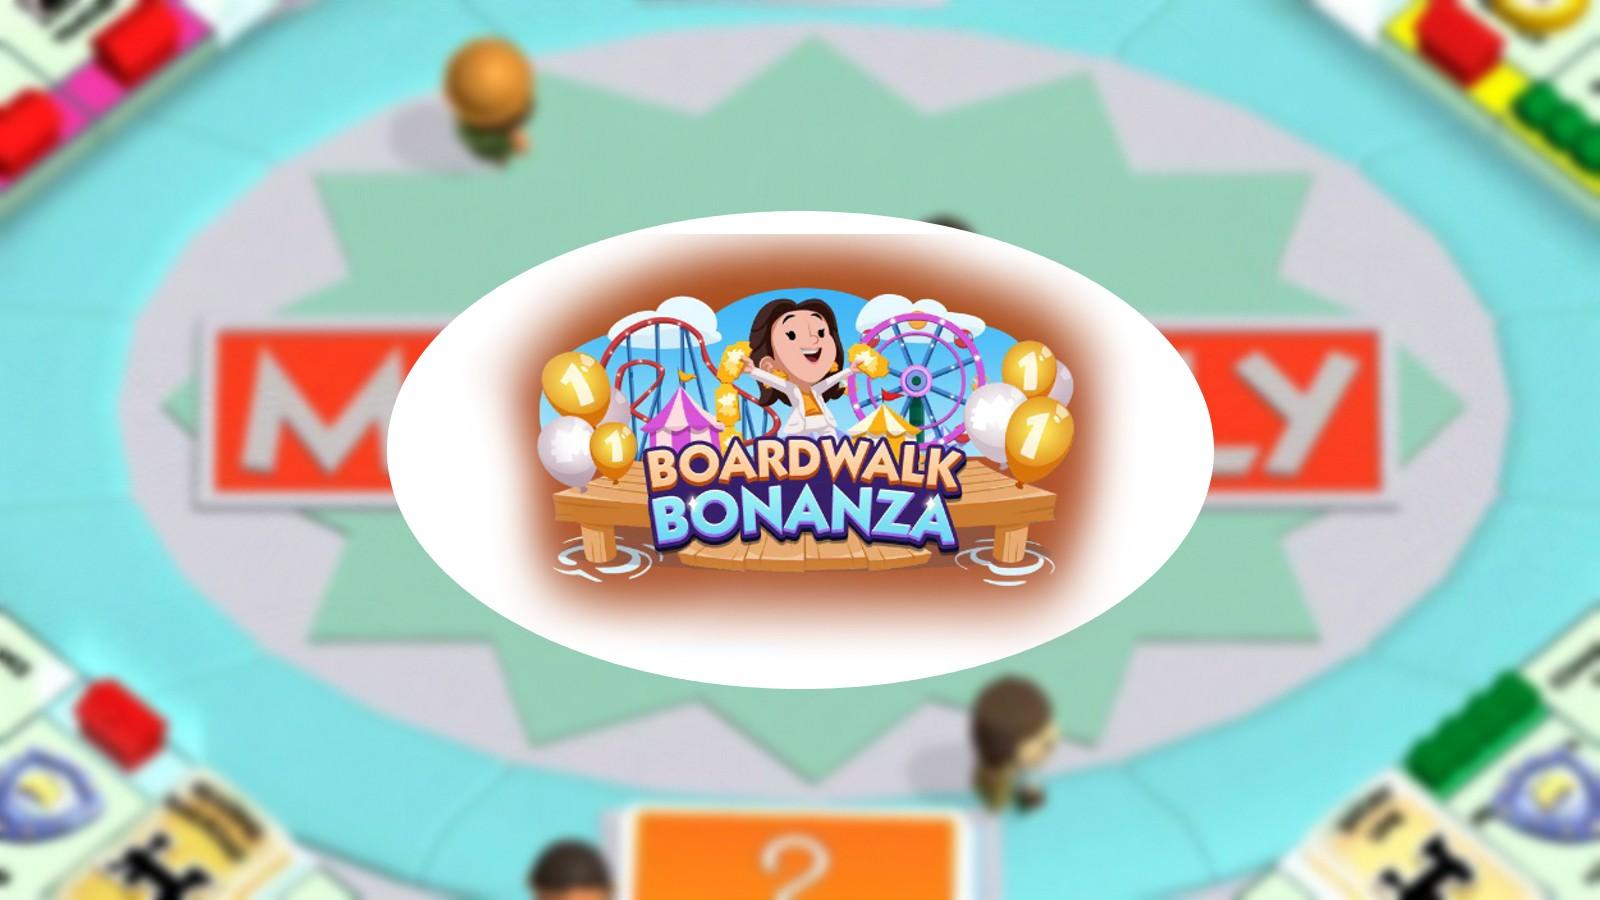 Boardwalk Bonanza milestone rewards